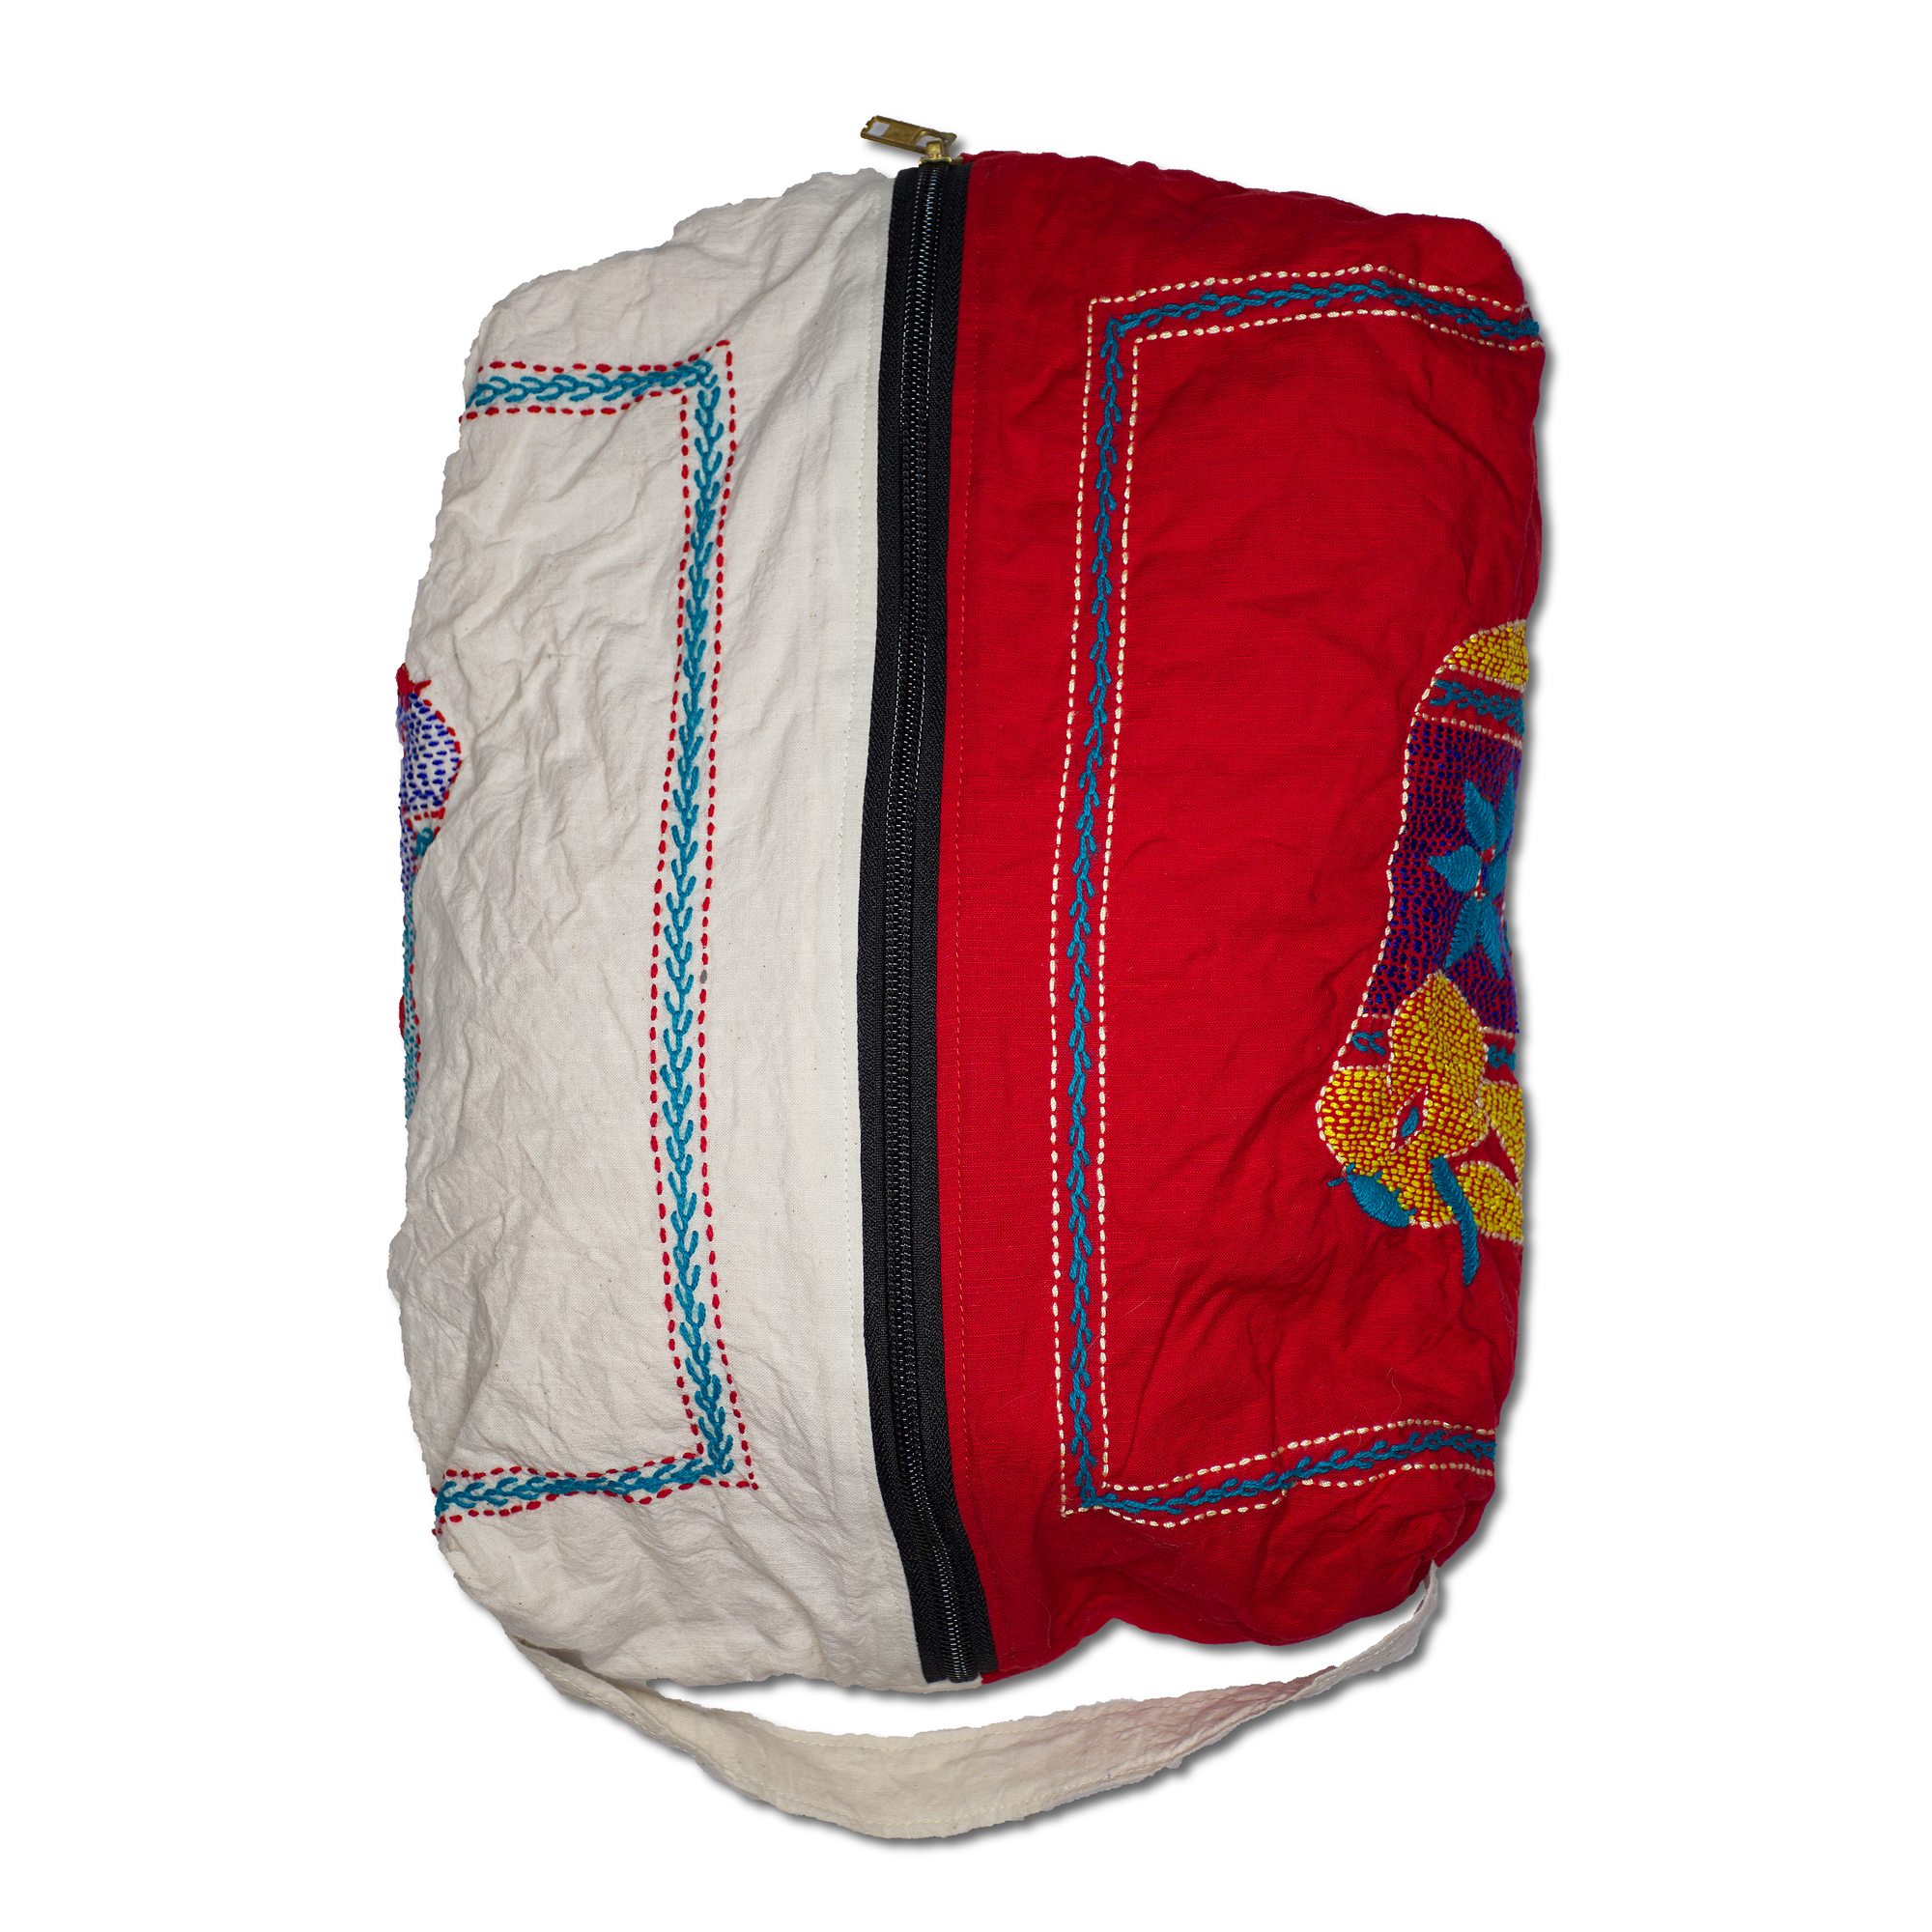 Pouch Bags - Dinajpur (elephant) Design - Sumi (Red) / Asfara (White)